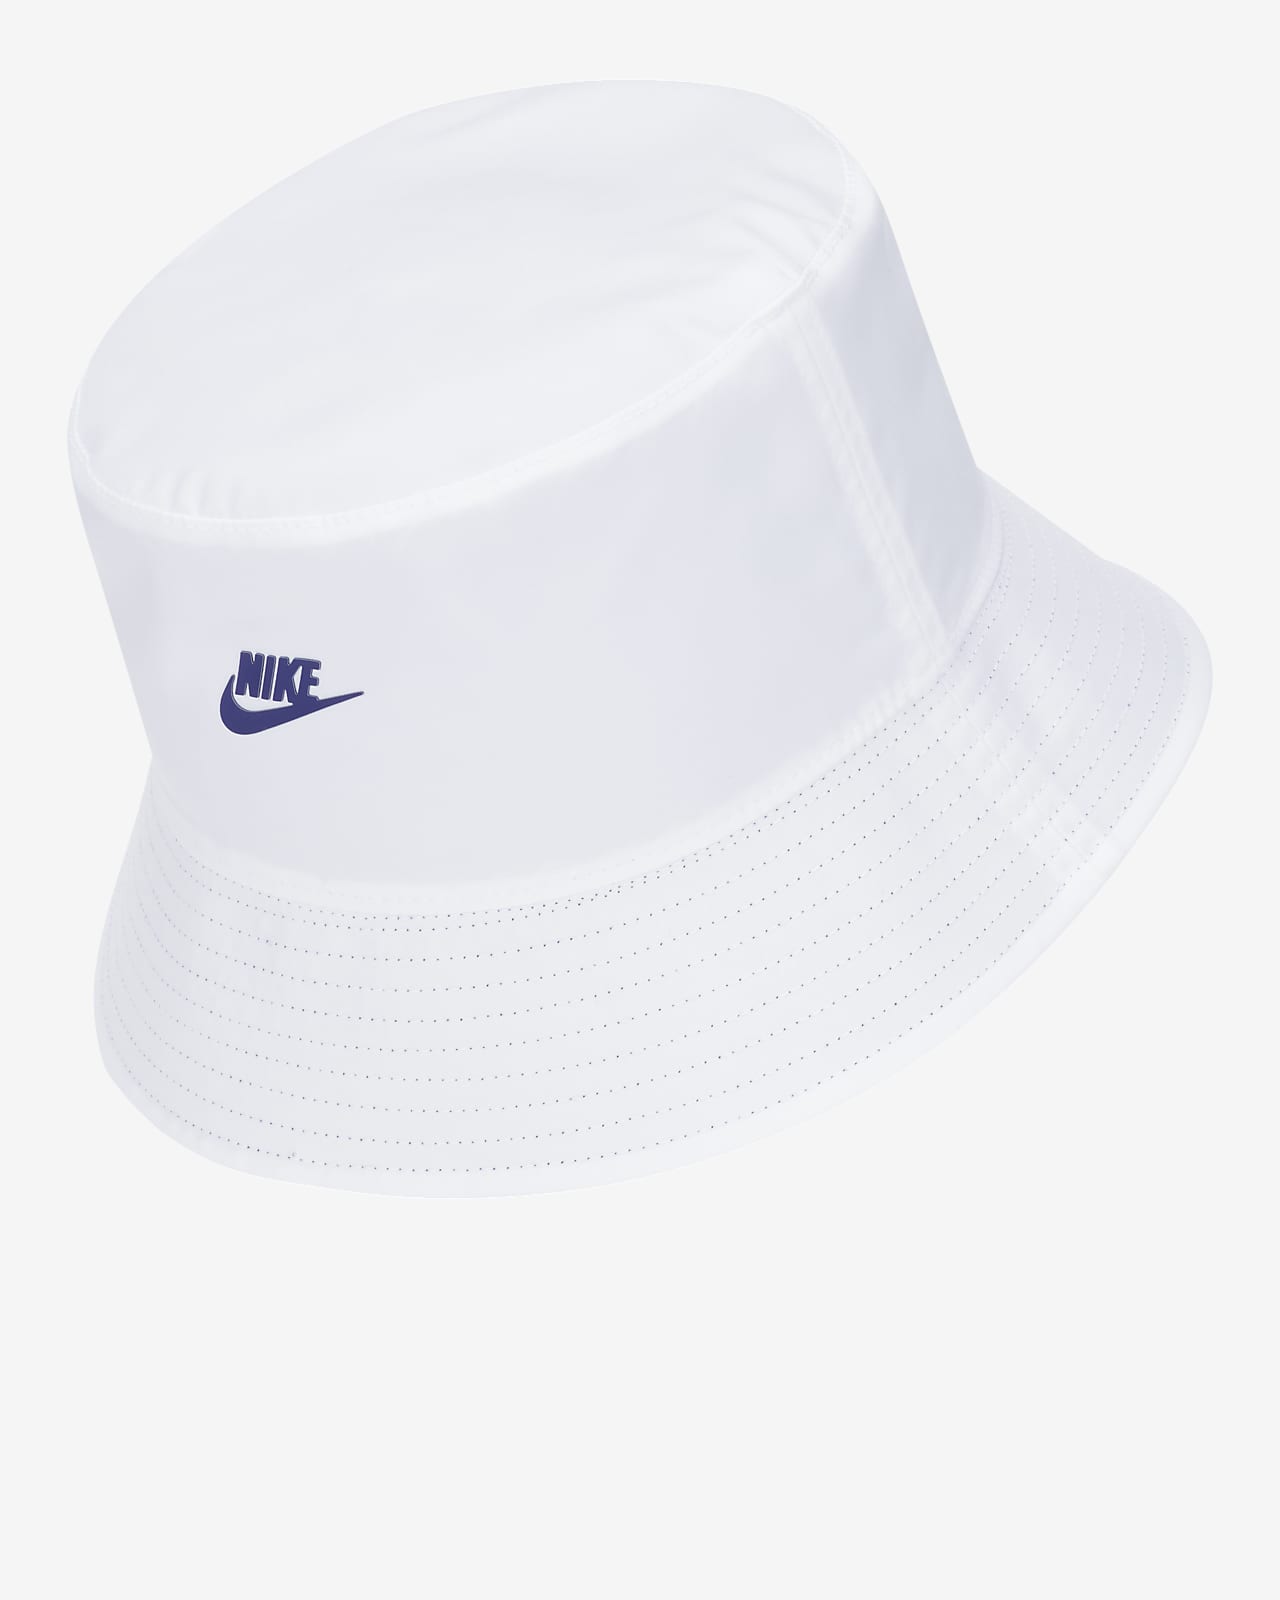 U.S. Reversible Bucket Hat. Nike.com